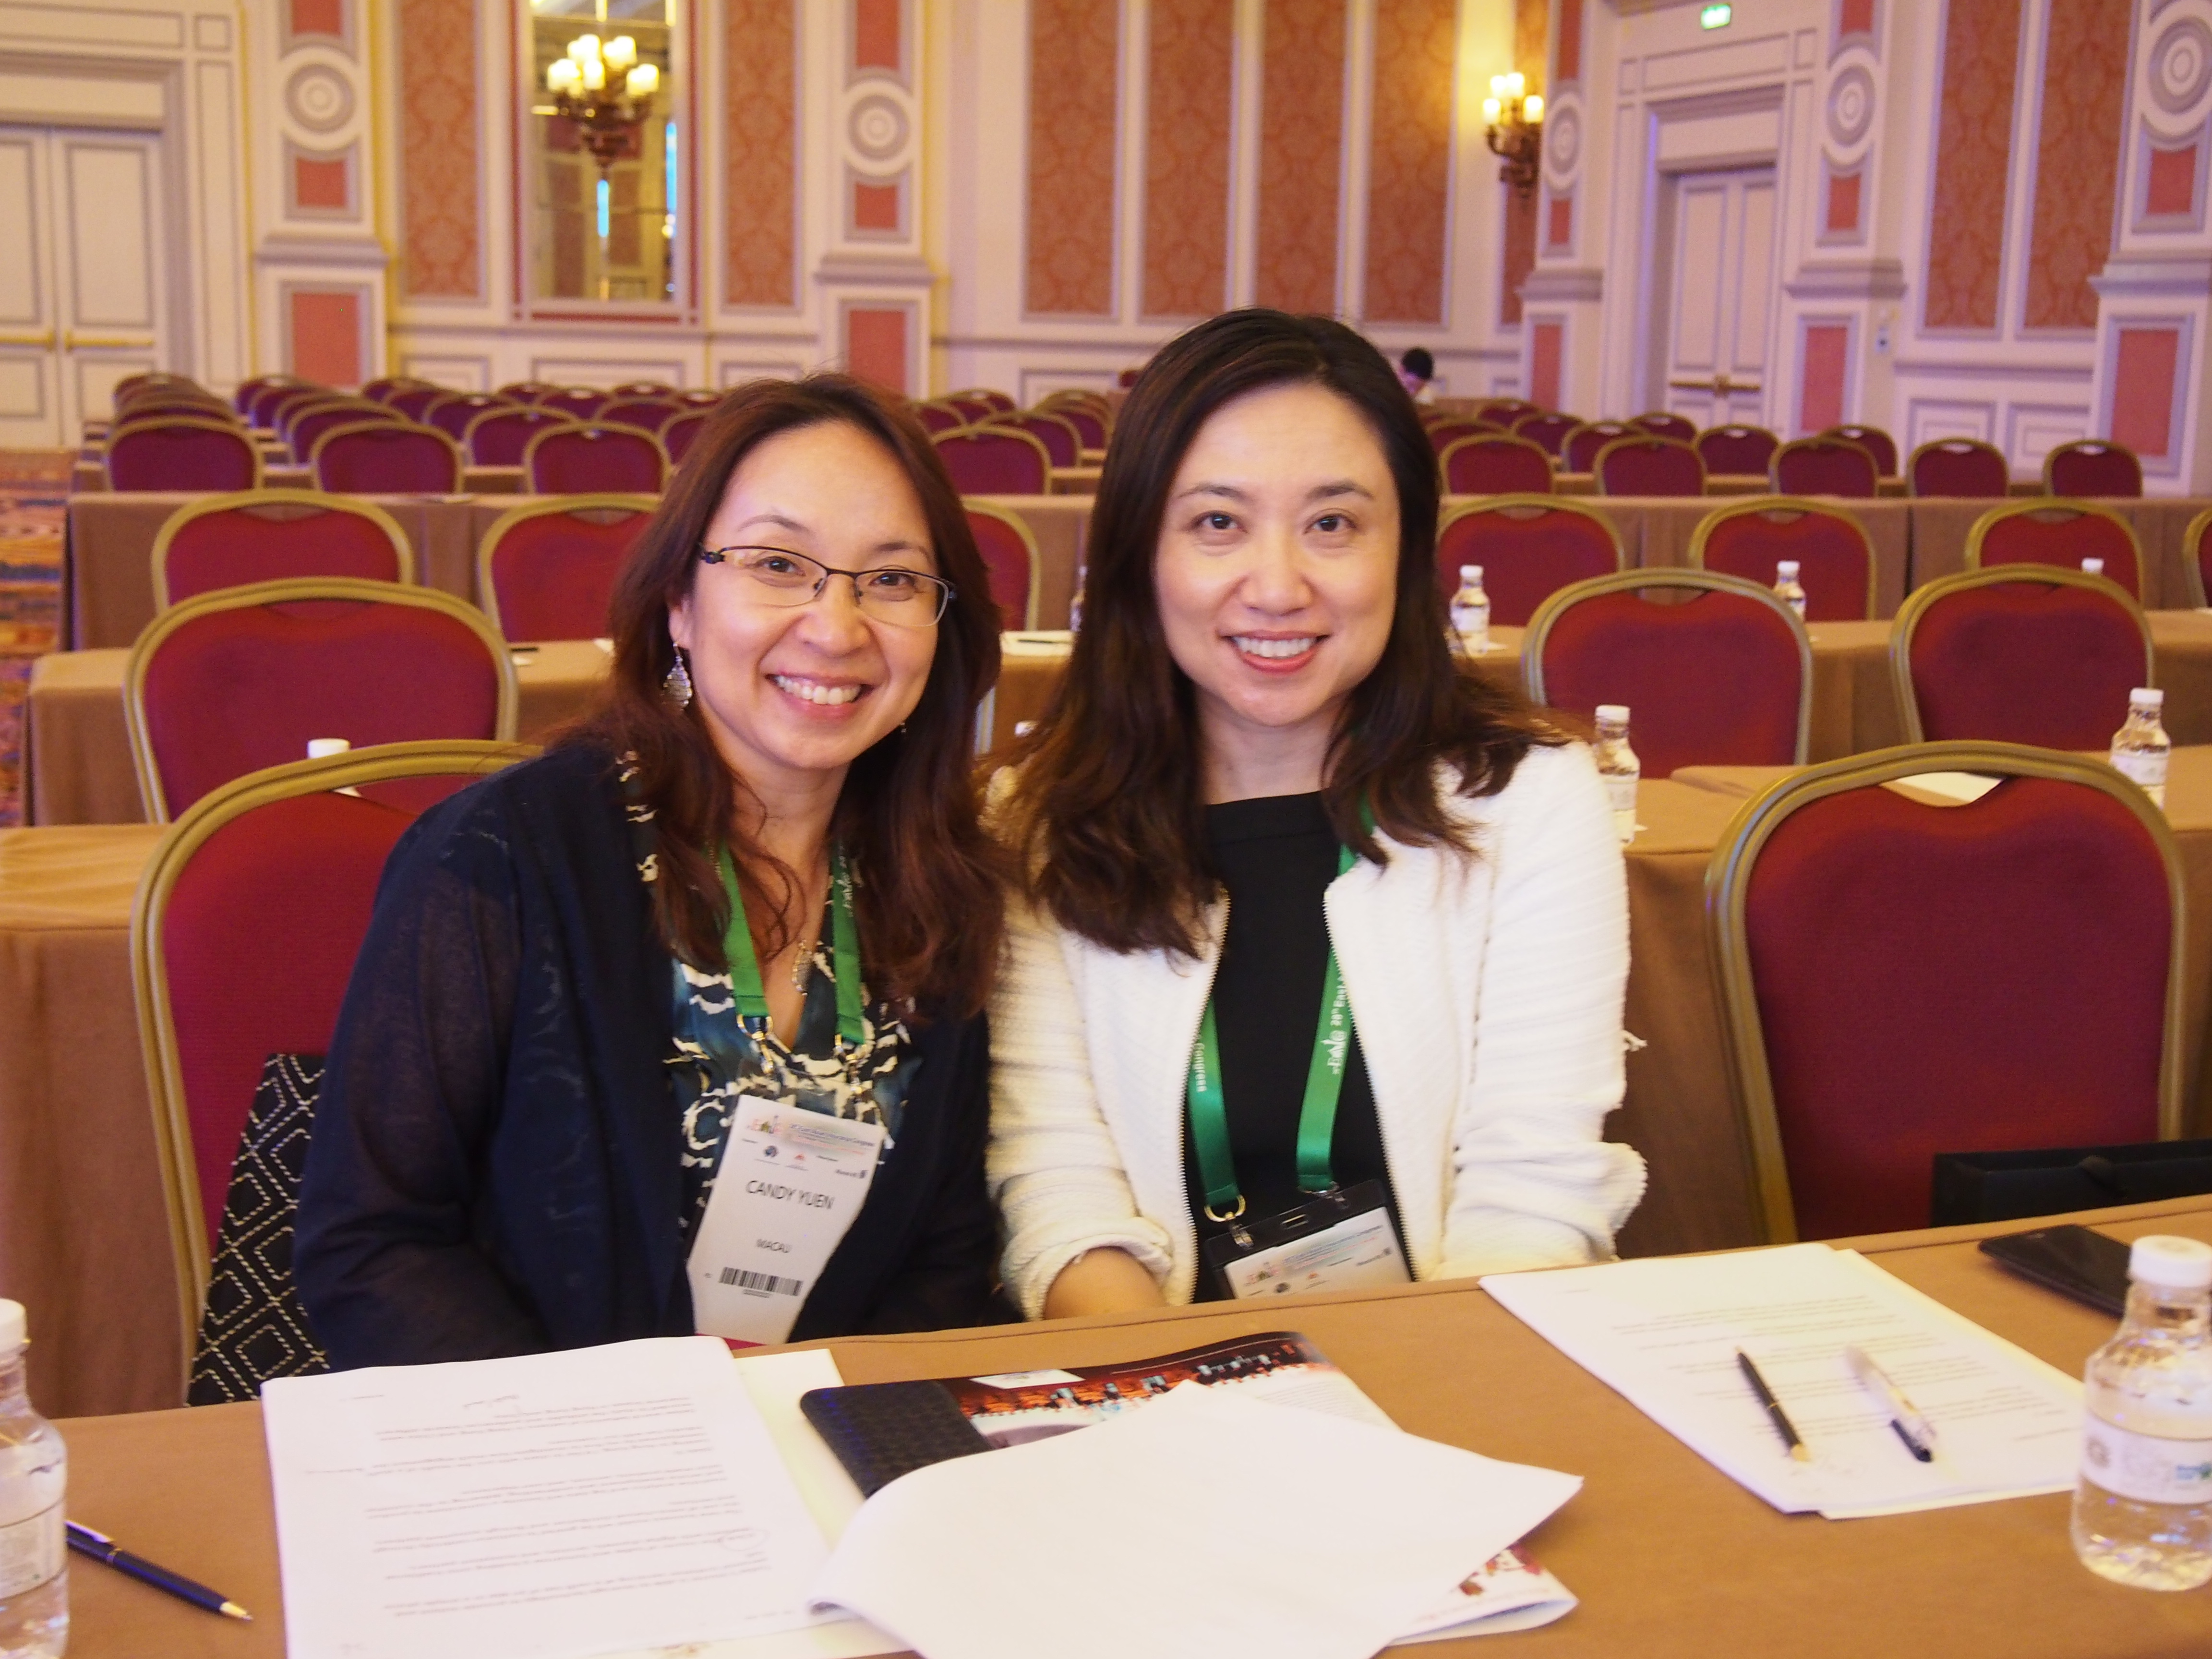 28th East Asian Insurance Congress 2016